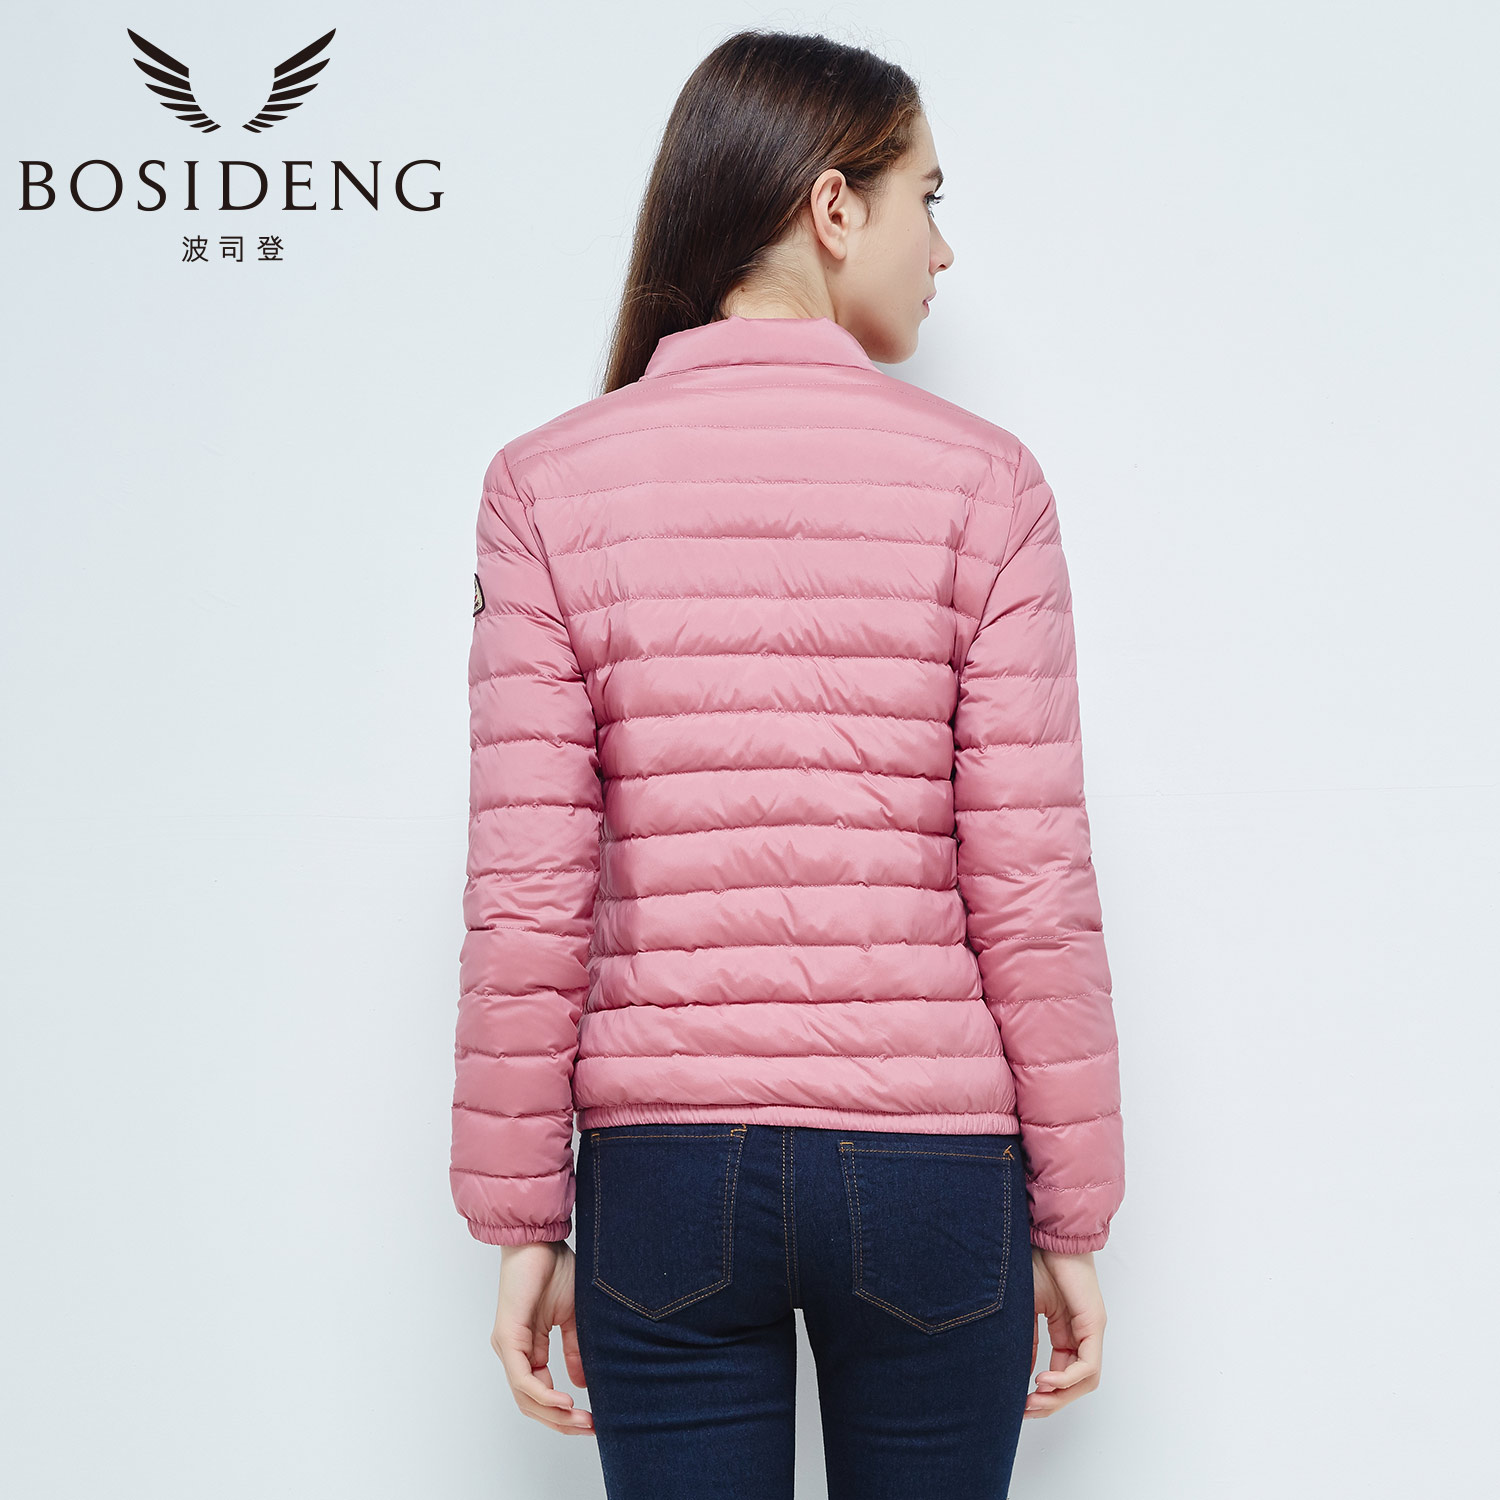 Bosideng/波司登2016新款修身轻薄秋季立领女式羽绒服B1601018产品展示图2